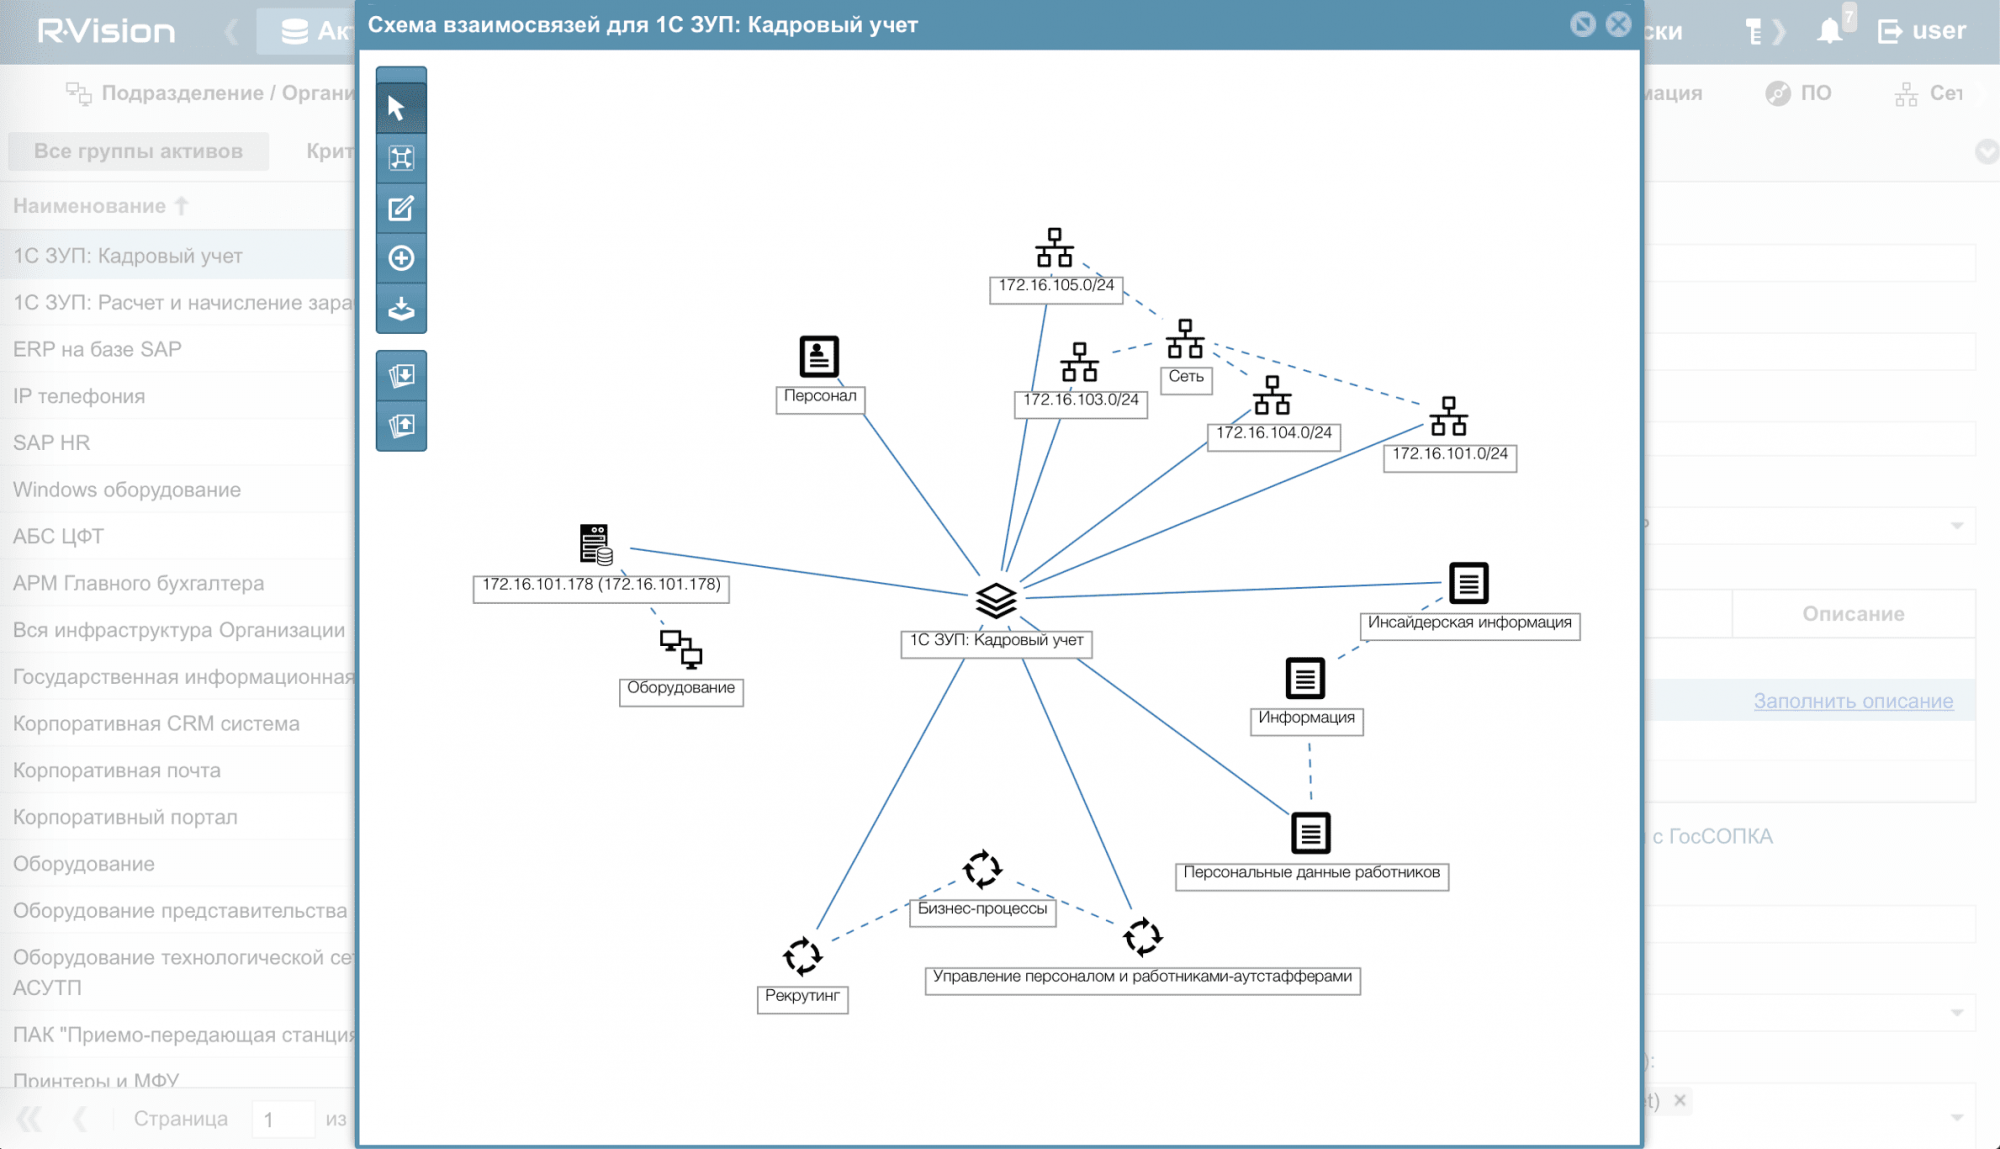 Пример визуализации ресурсно-сервисной модели